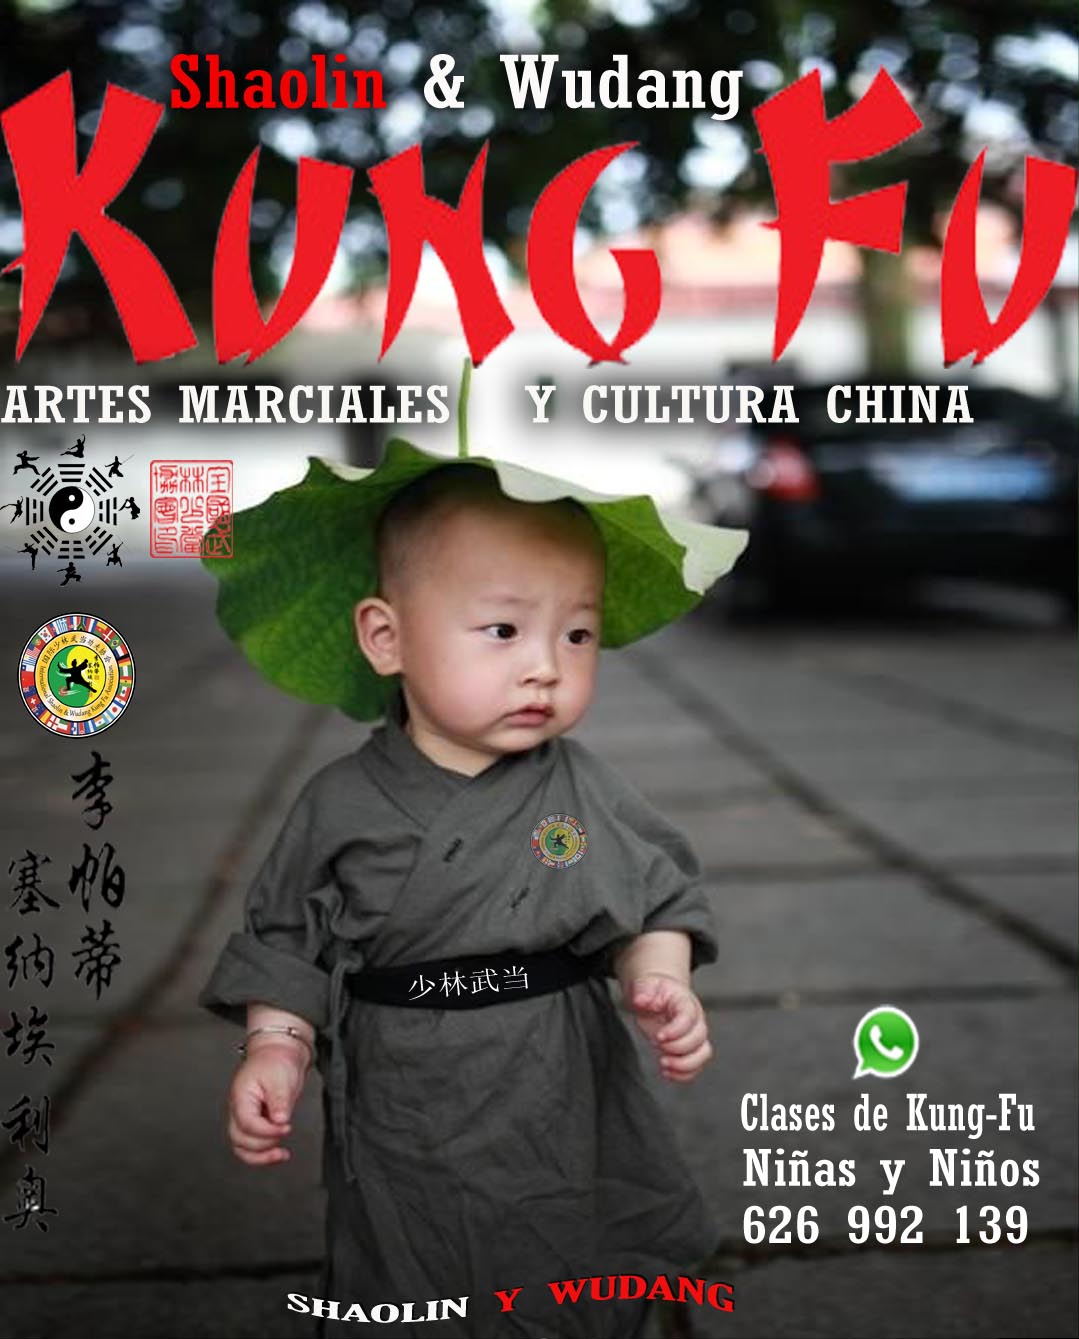 Clases de kung fu para niñas, niños.